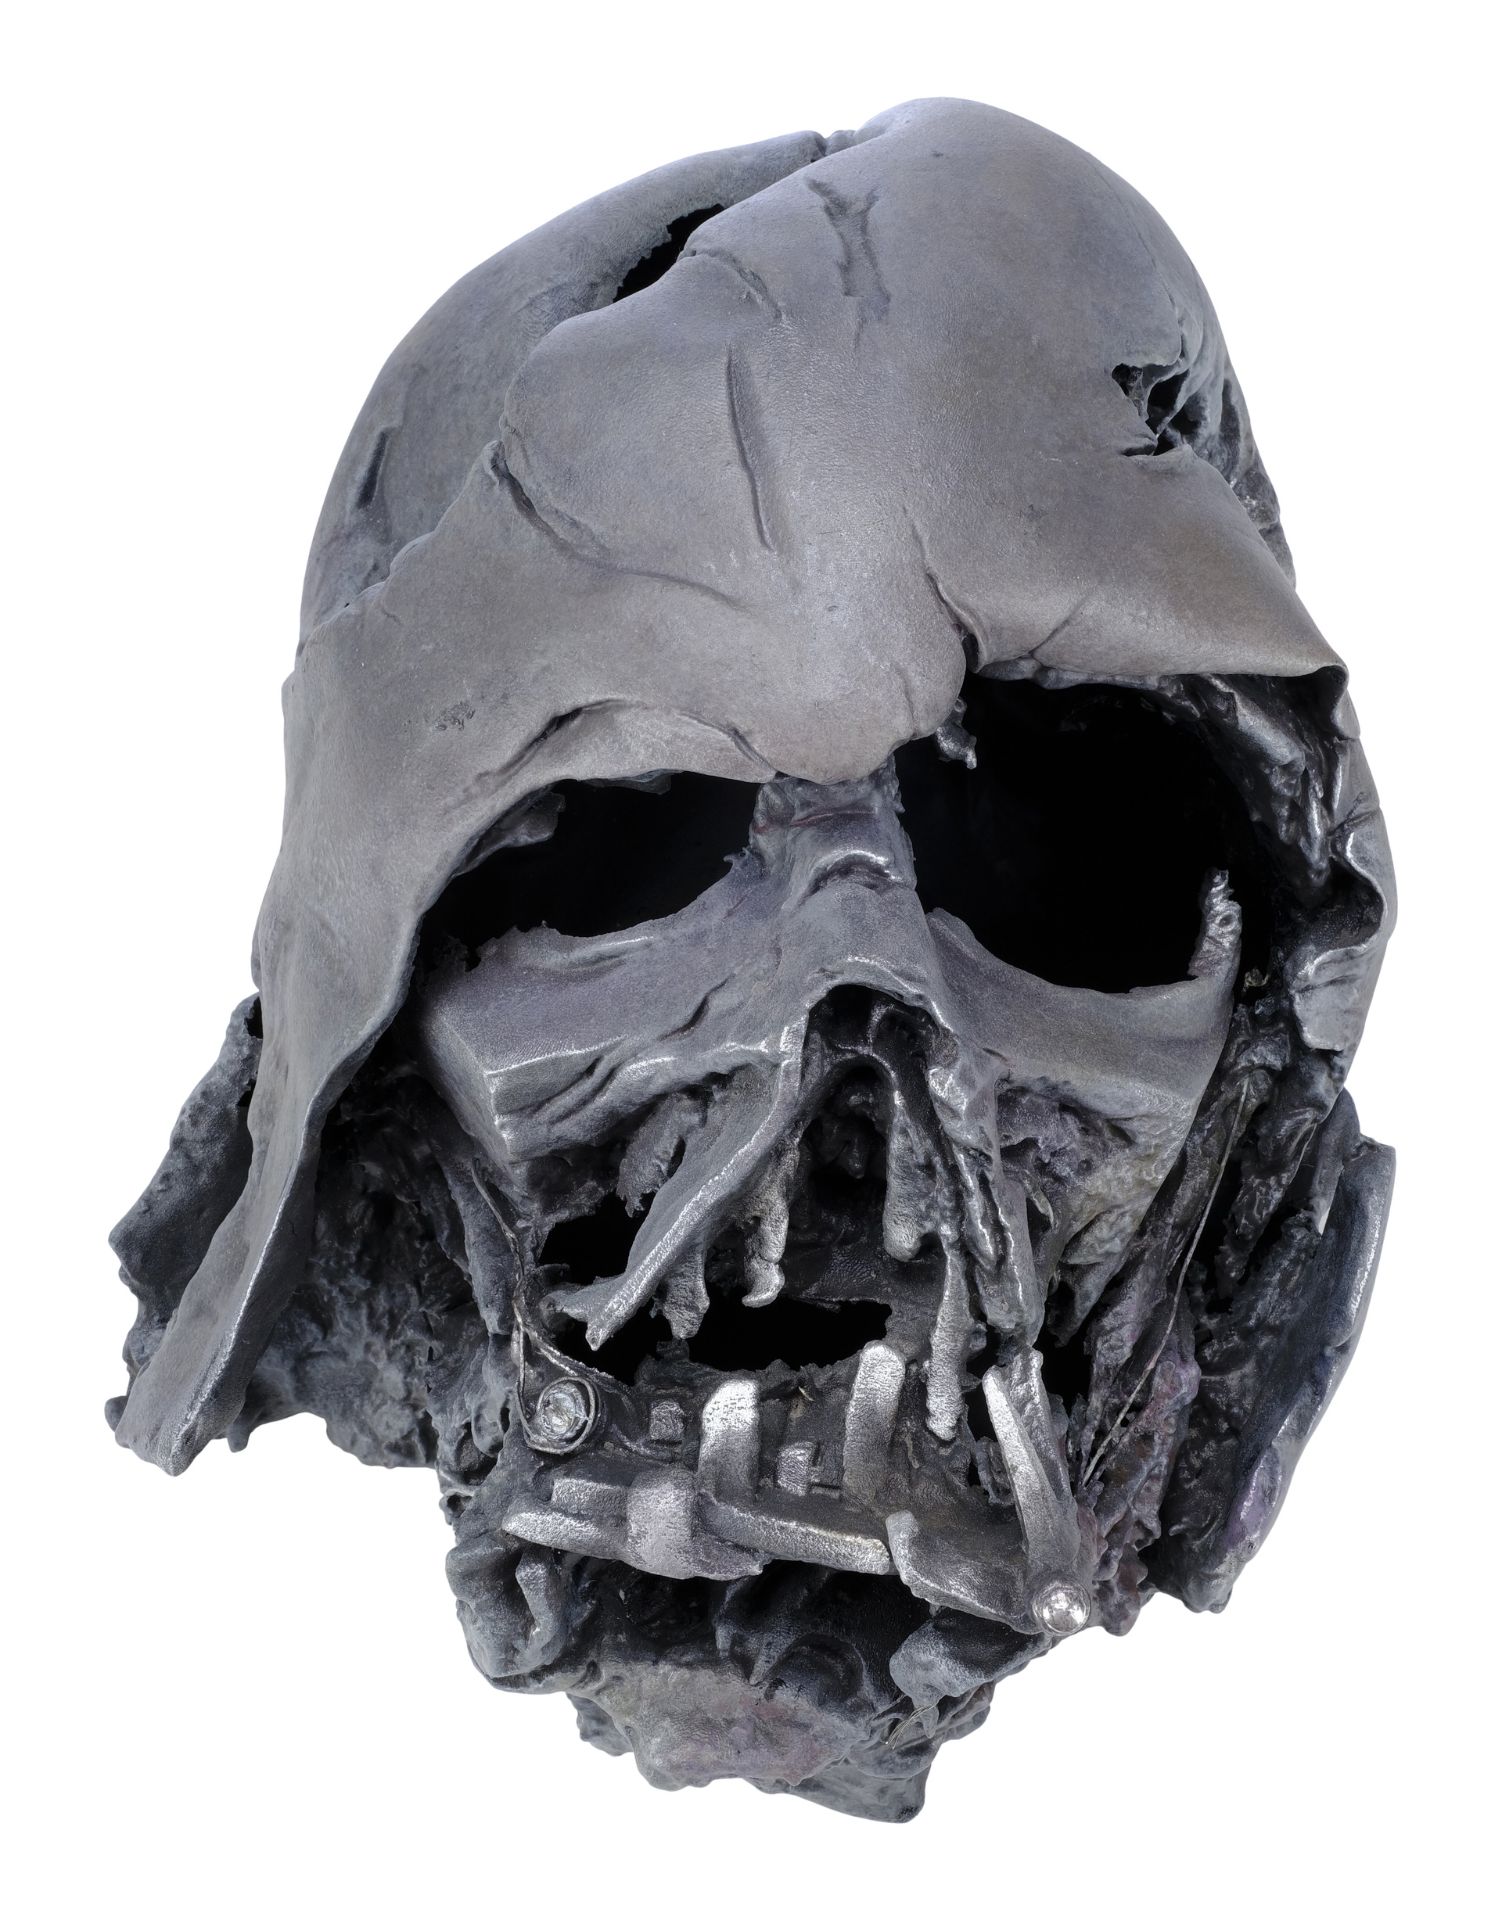 STAR WARS: THE FORCE AWAKENS (2015) - Propshop Melted Darth Vader Helmet Replica